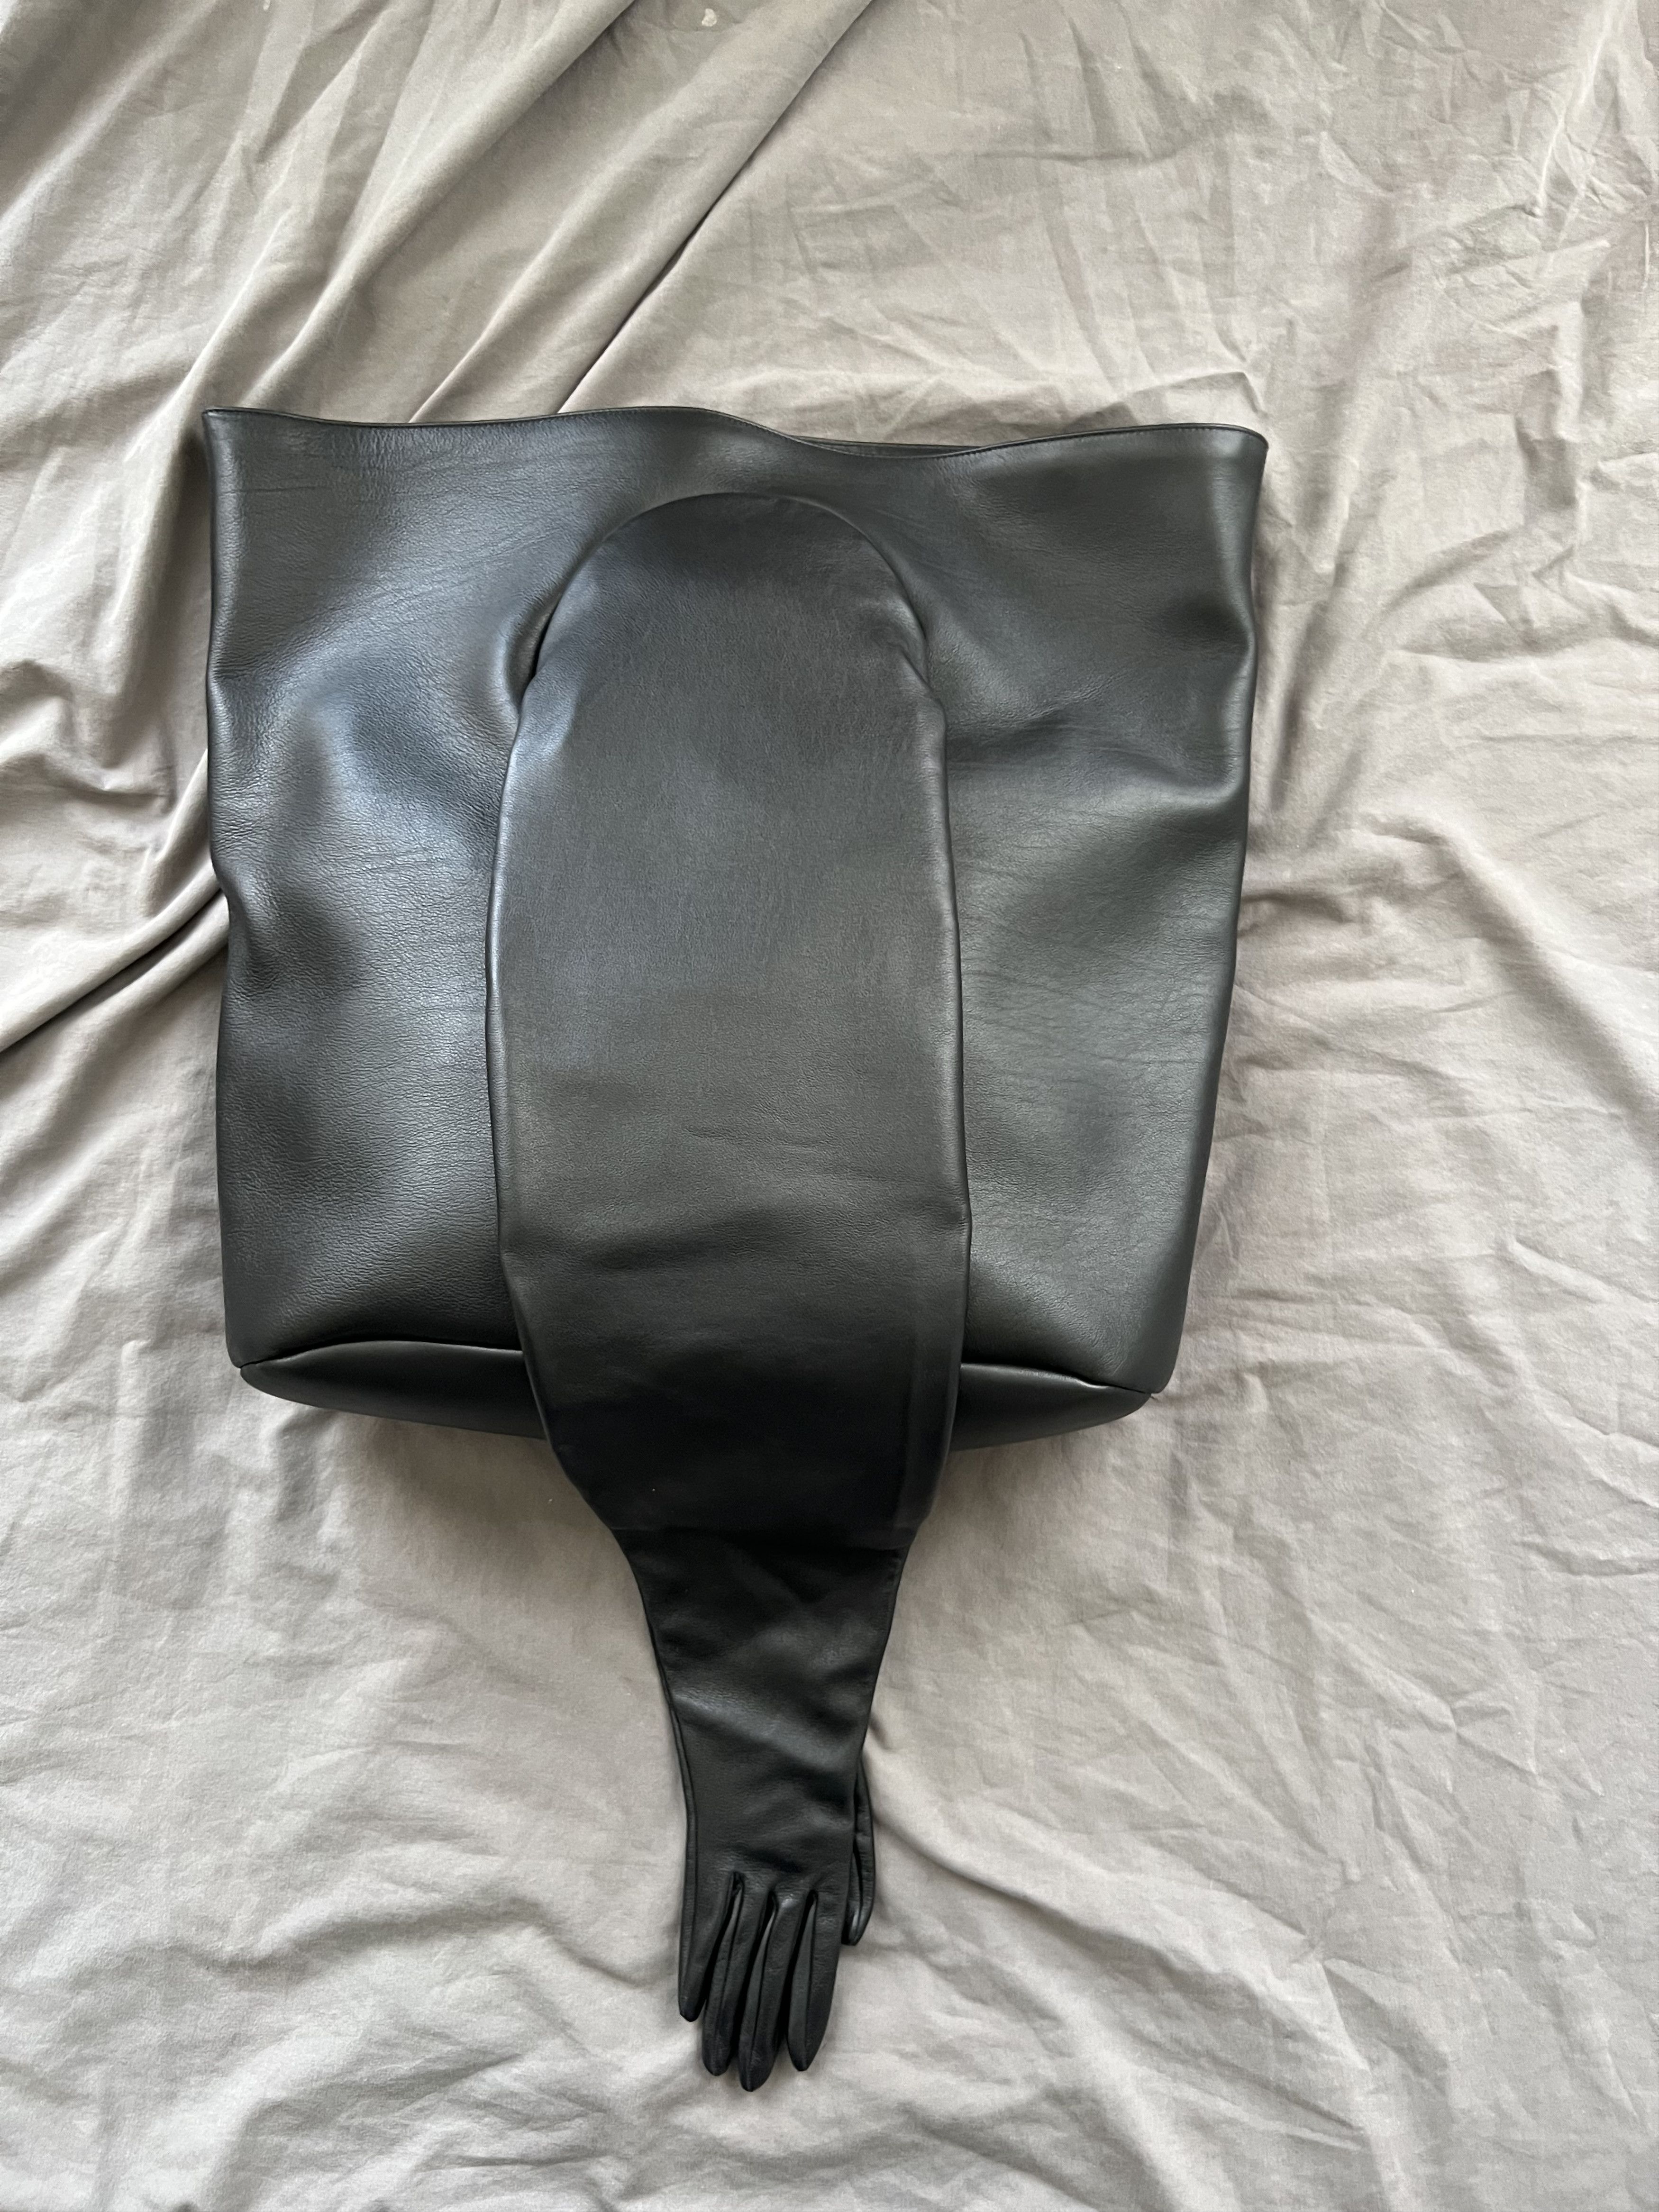 Balenciaga Large Glove Tote Bag in Black